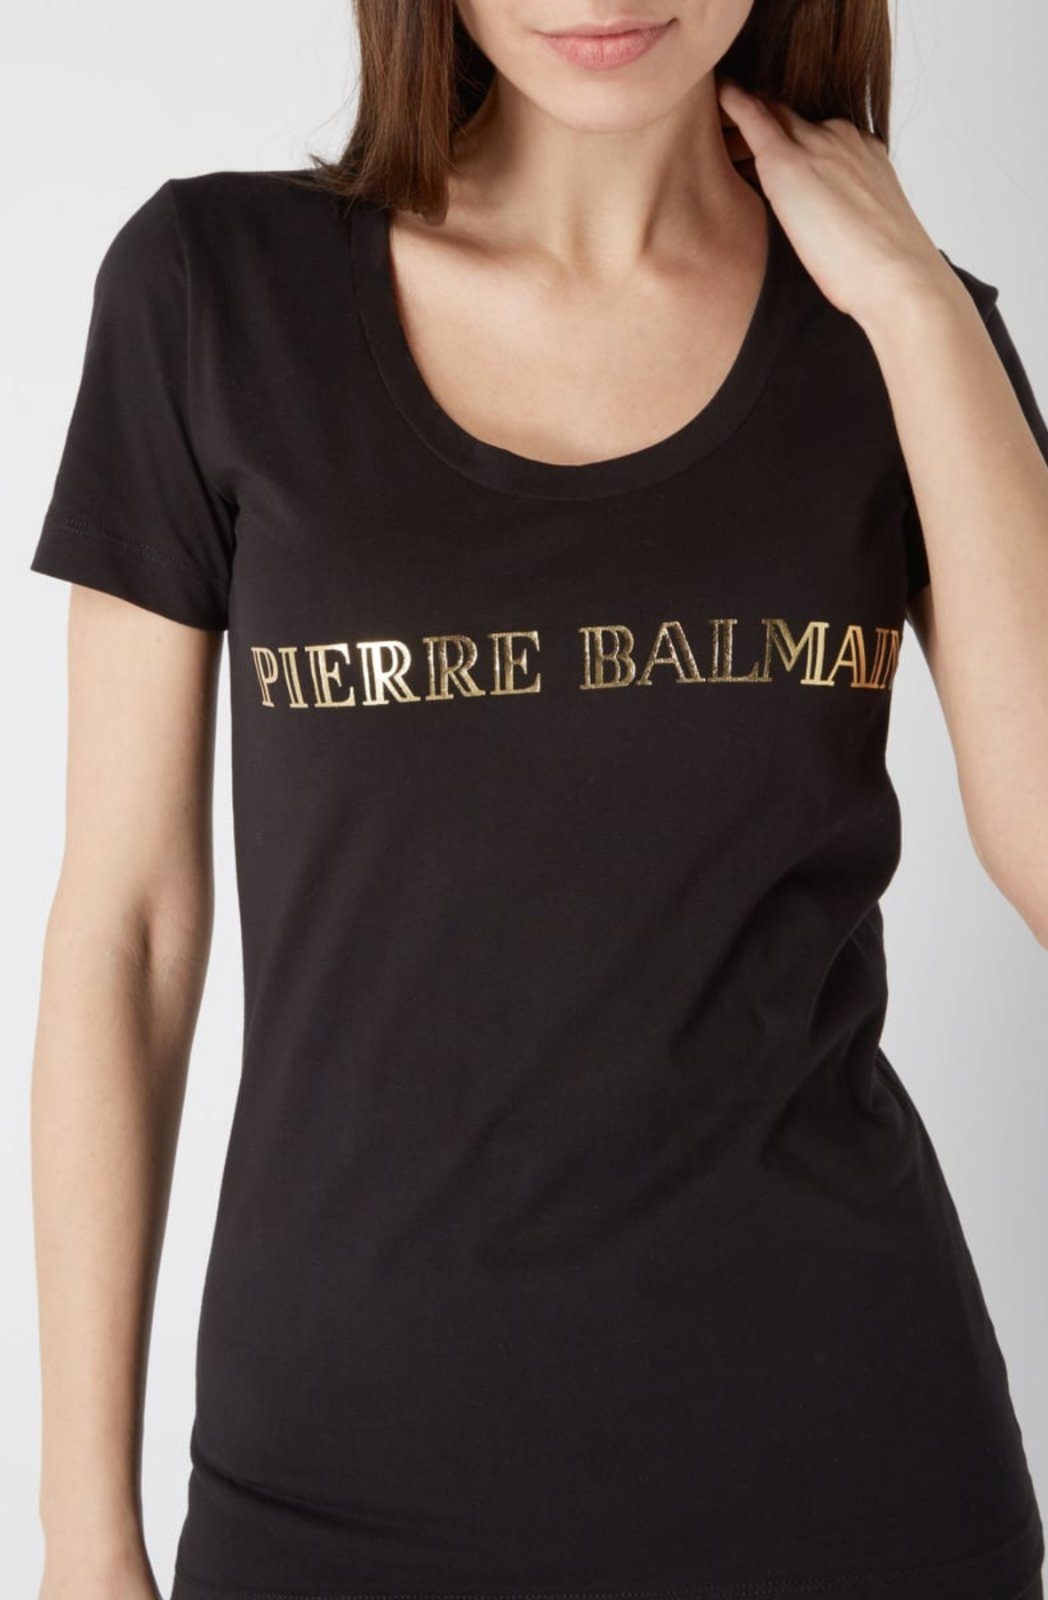 Balmain T-Shirt PIERRE BALMAIN LOGOSHIRT ICONIC BRAND LOGO CULT BLUSE ROCK TOP